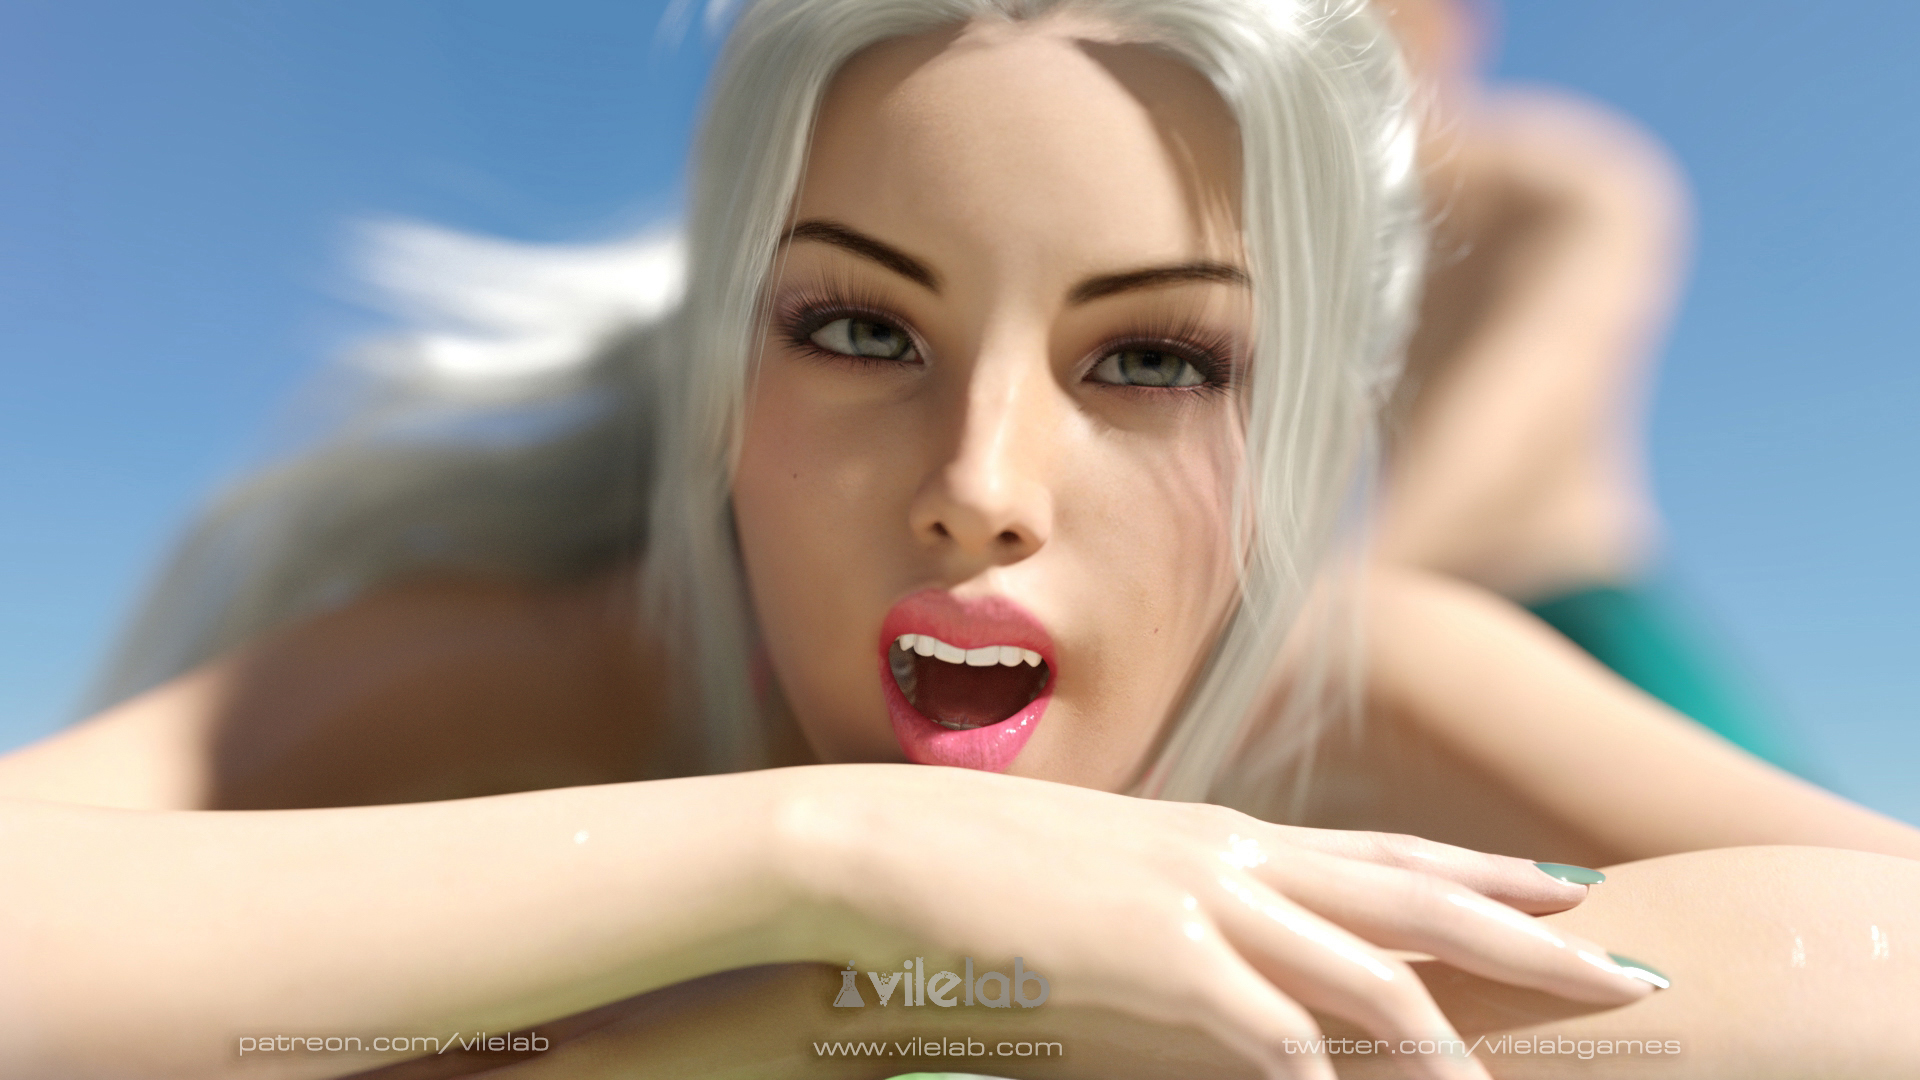 Indecent Desires by Vilelab - Adult Interactive Game - Monique c (www.vilelab.com).jpg